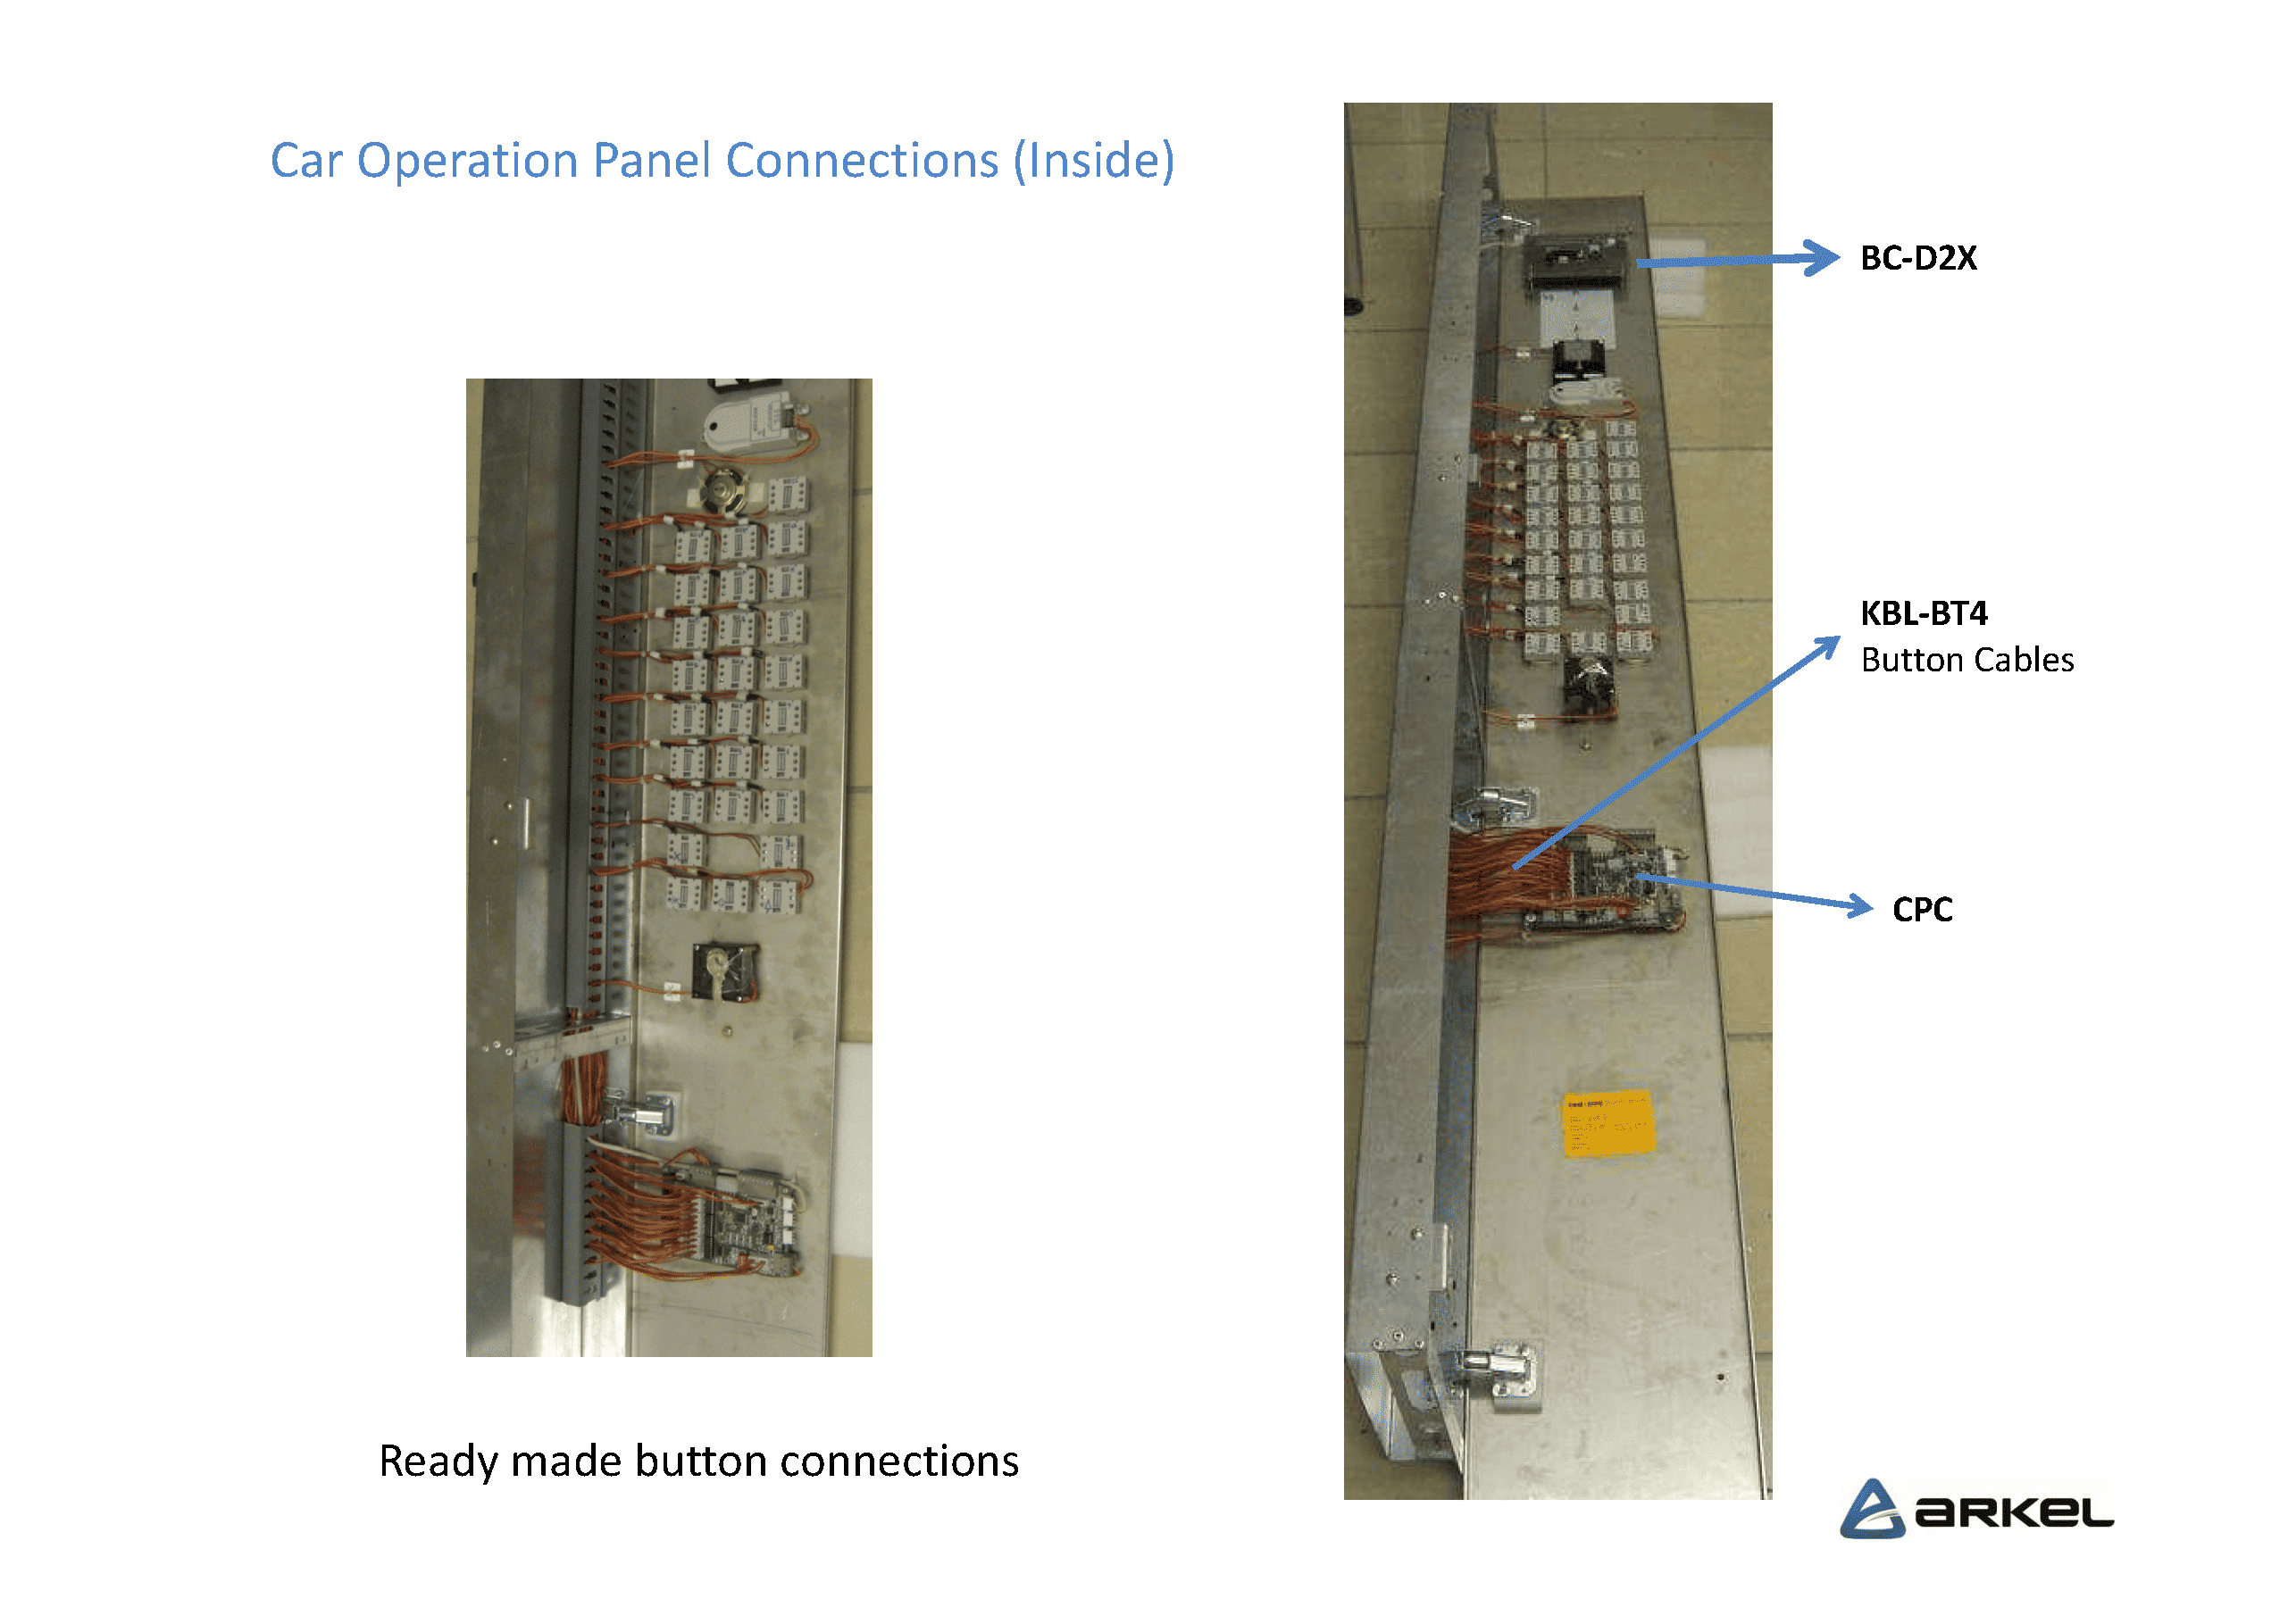 Wiring Diagram Arkel Arcode Car Operation Panel